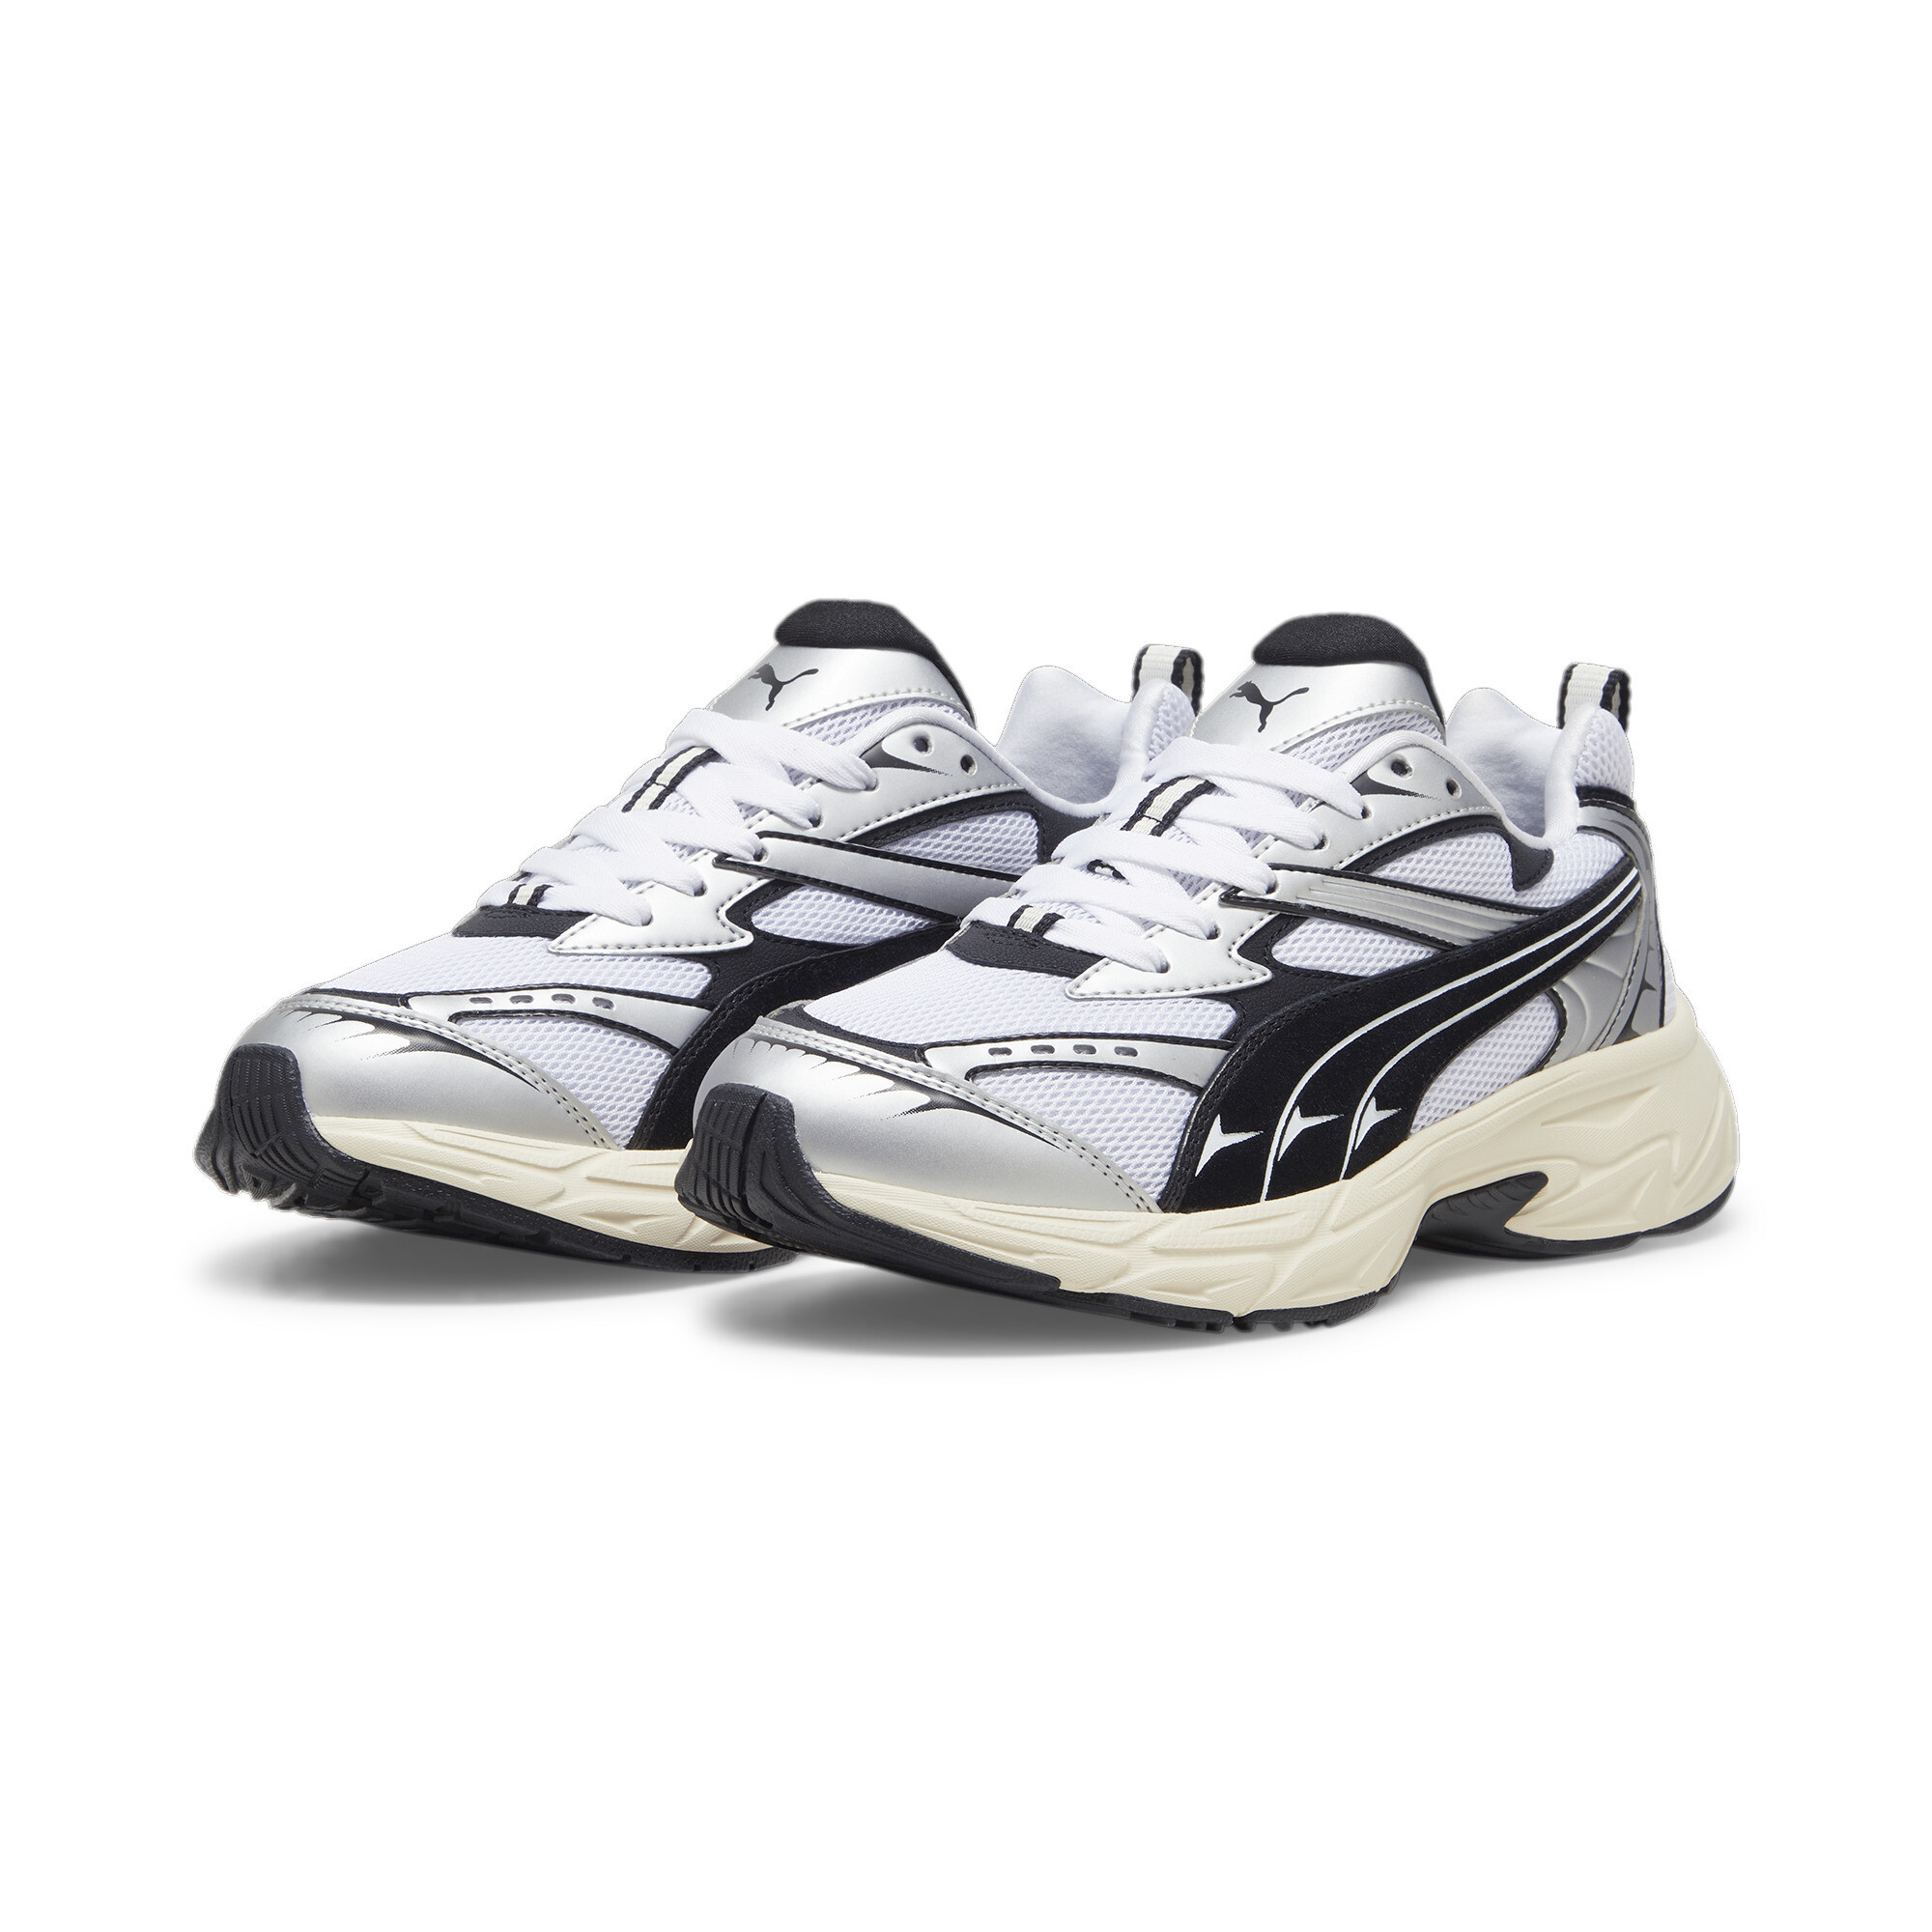 Puma Morphic Retro Men's Shoes - Grey/Black - 395920 02